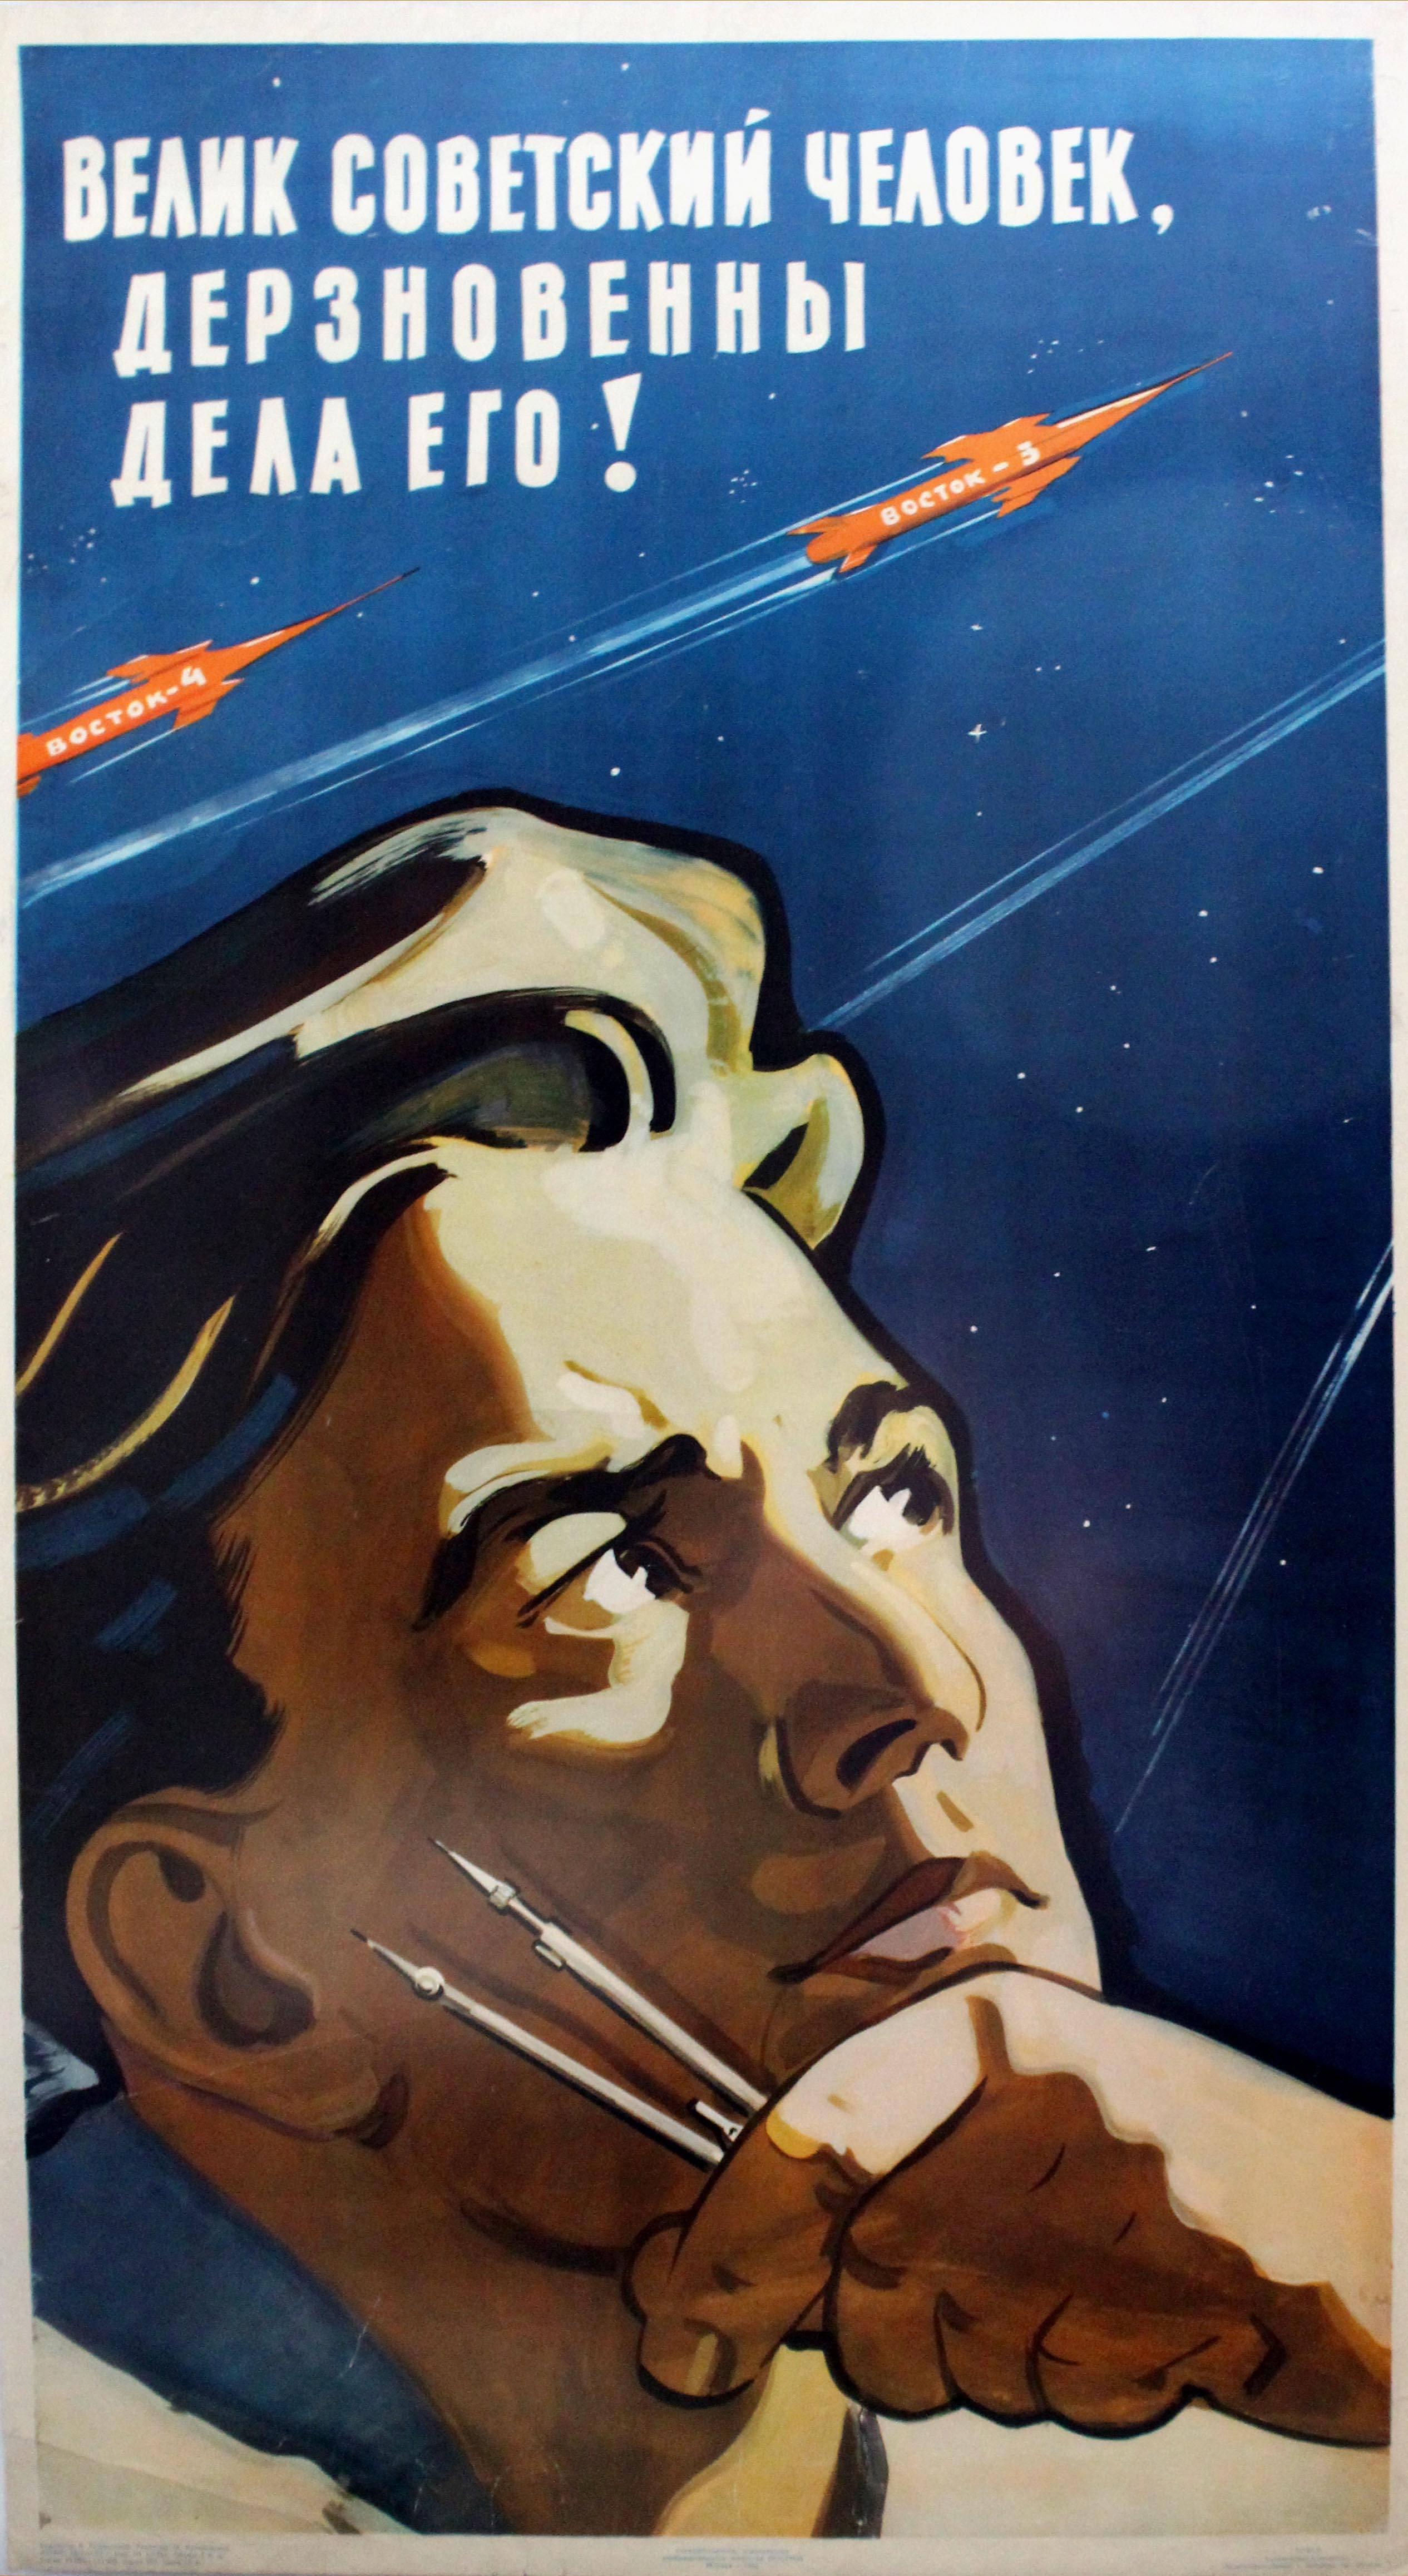 B. Reshetnikov Print - Original Vintage 1962 Russian Space Propaganda Poster: Great Is The Soviet Human